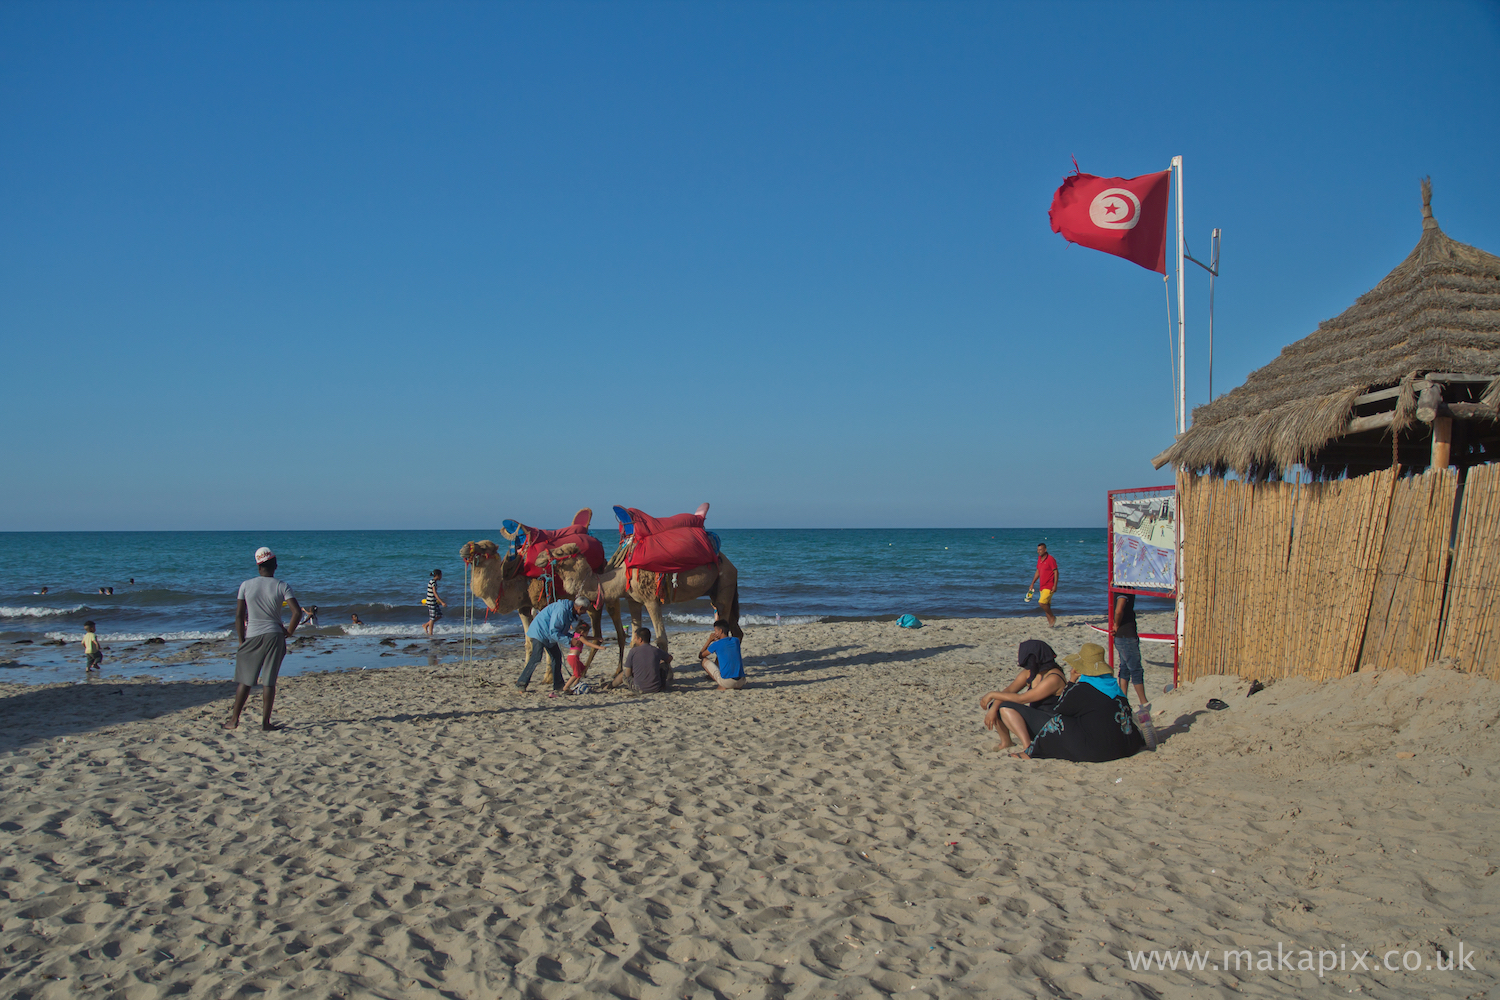 TUNISIA 2015